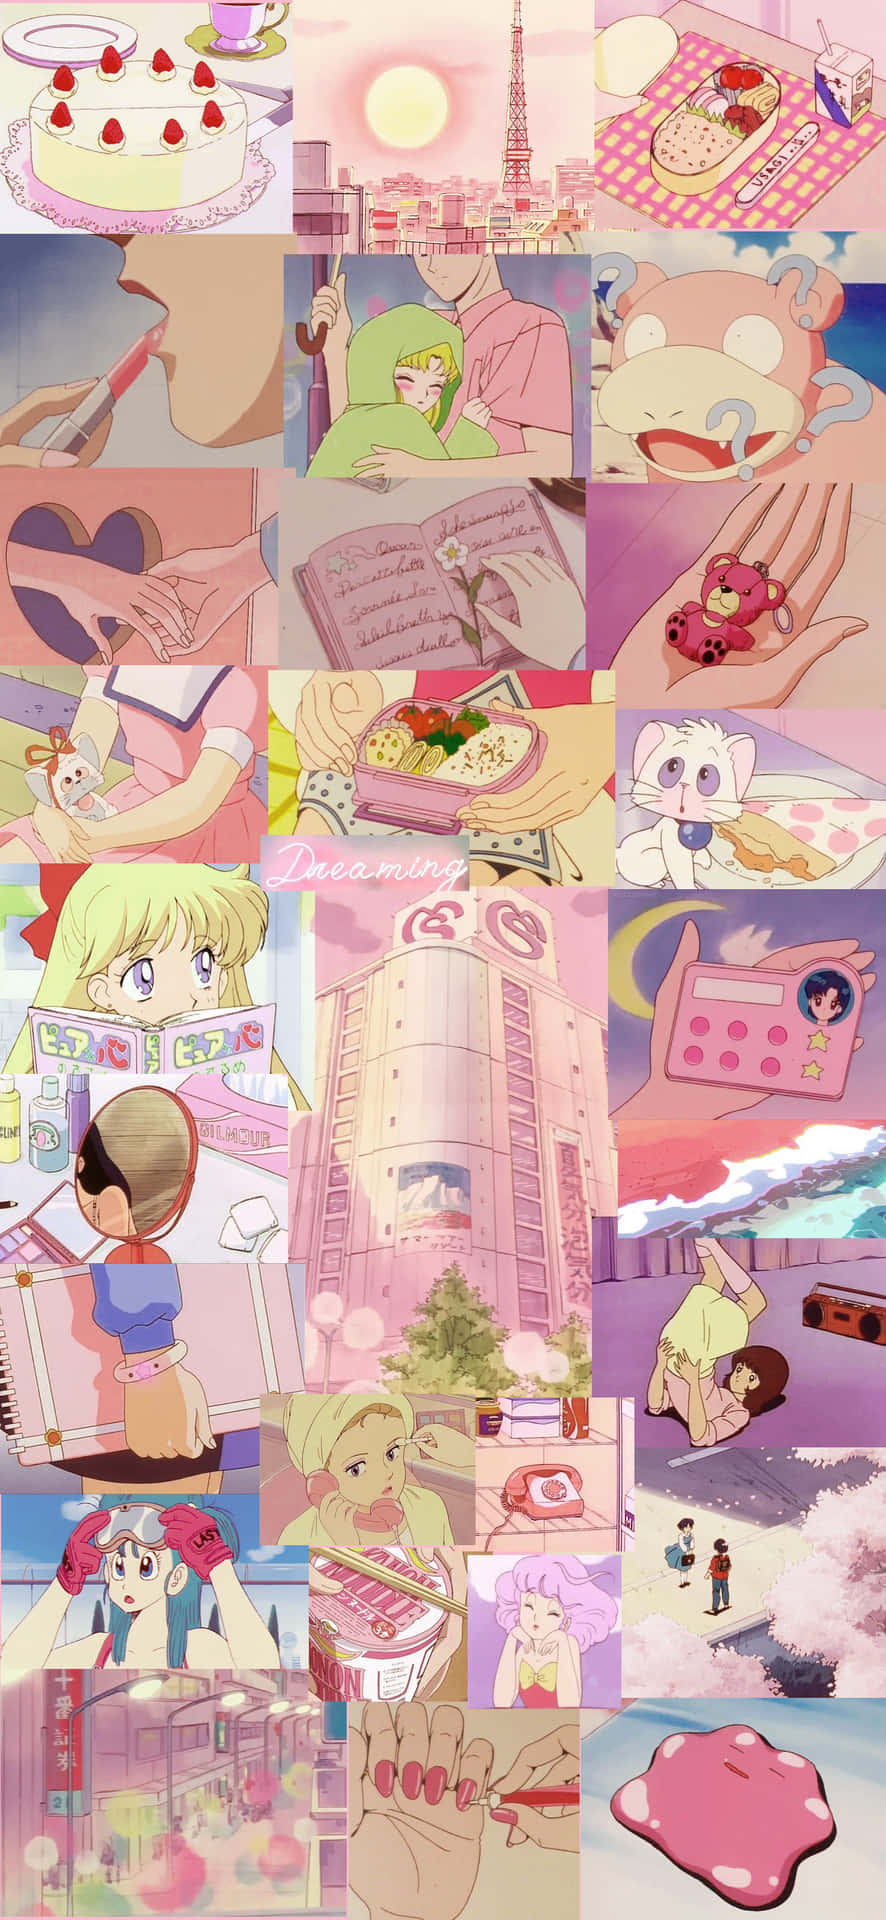 IMANIME - En inaktiv telefon med en lyserød anime-æstetik Wallpaper